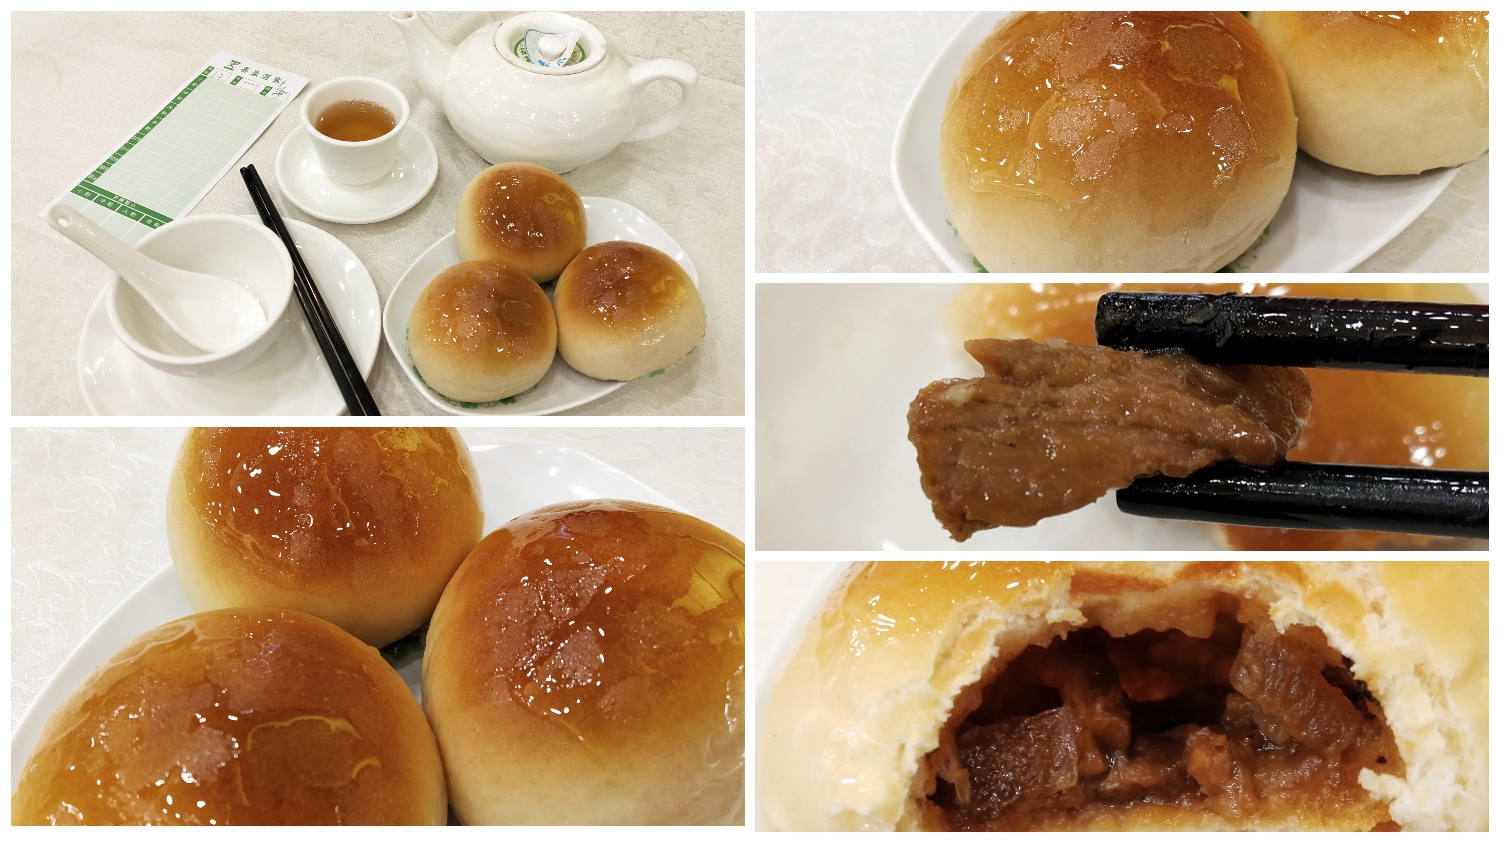 Western style baked BBQ pork bun in Hong Kong's dim sum restaurant